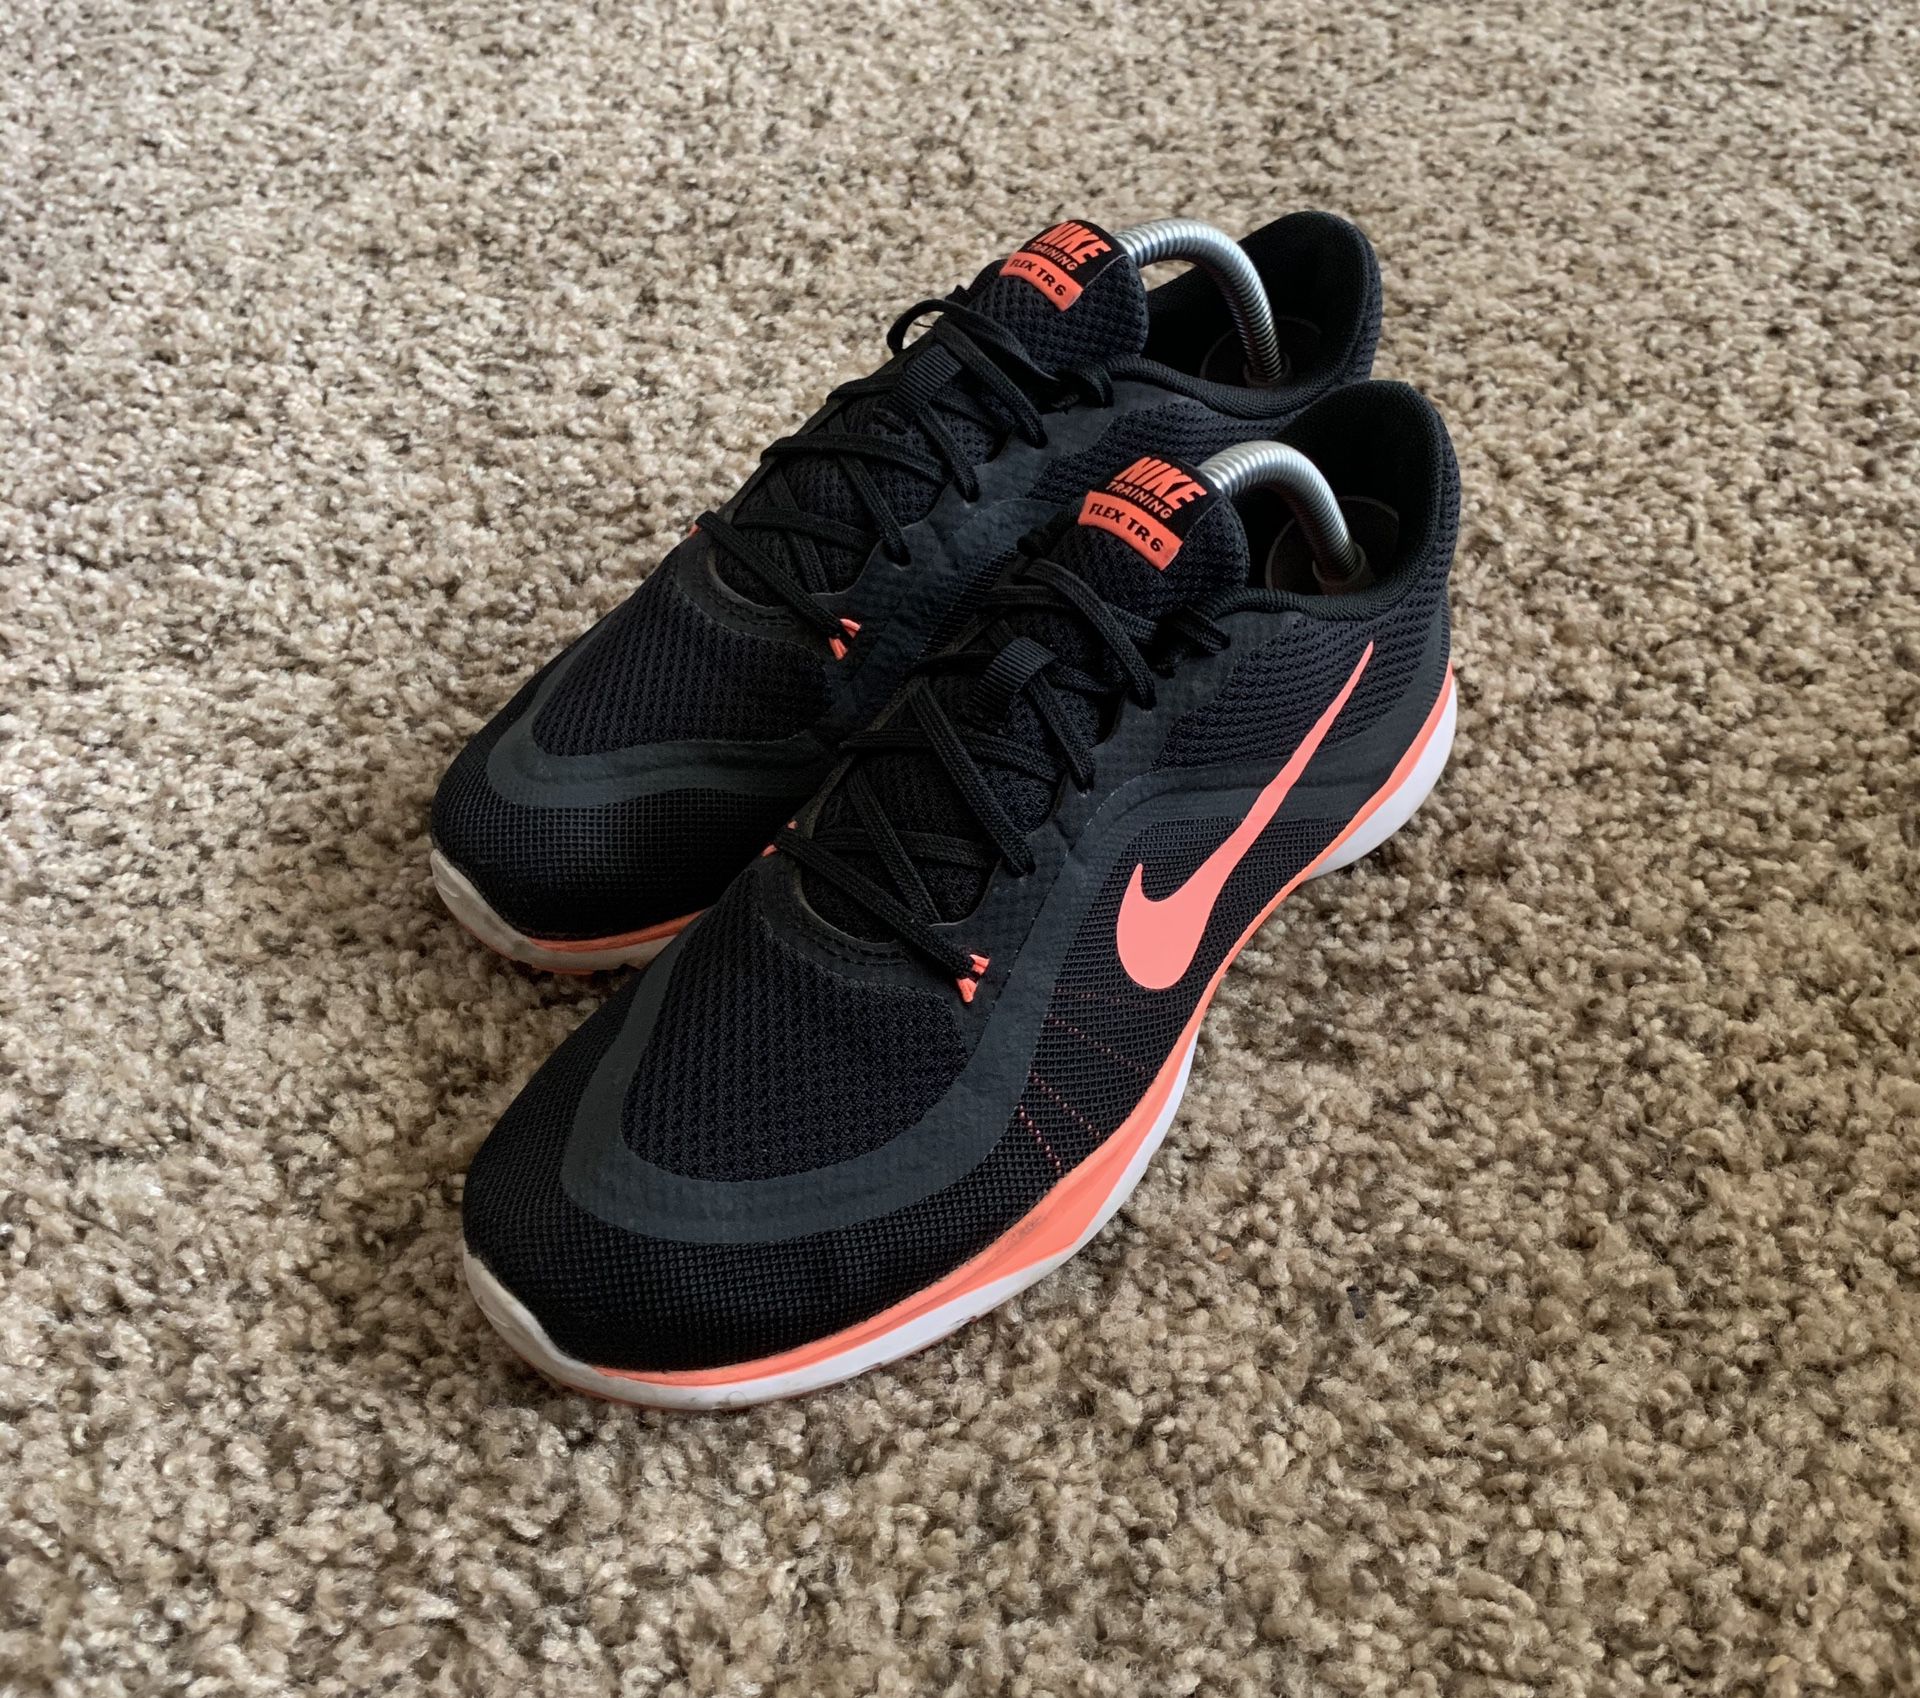 Nike Flex TR 6 Running Shoes Women’s Size 9